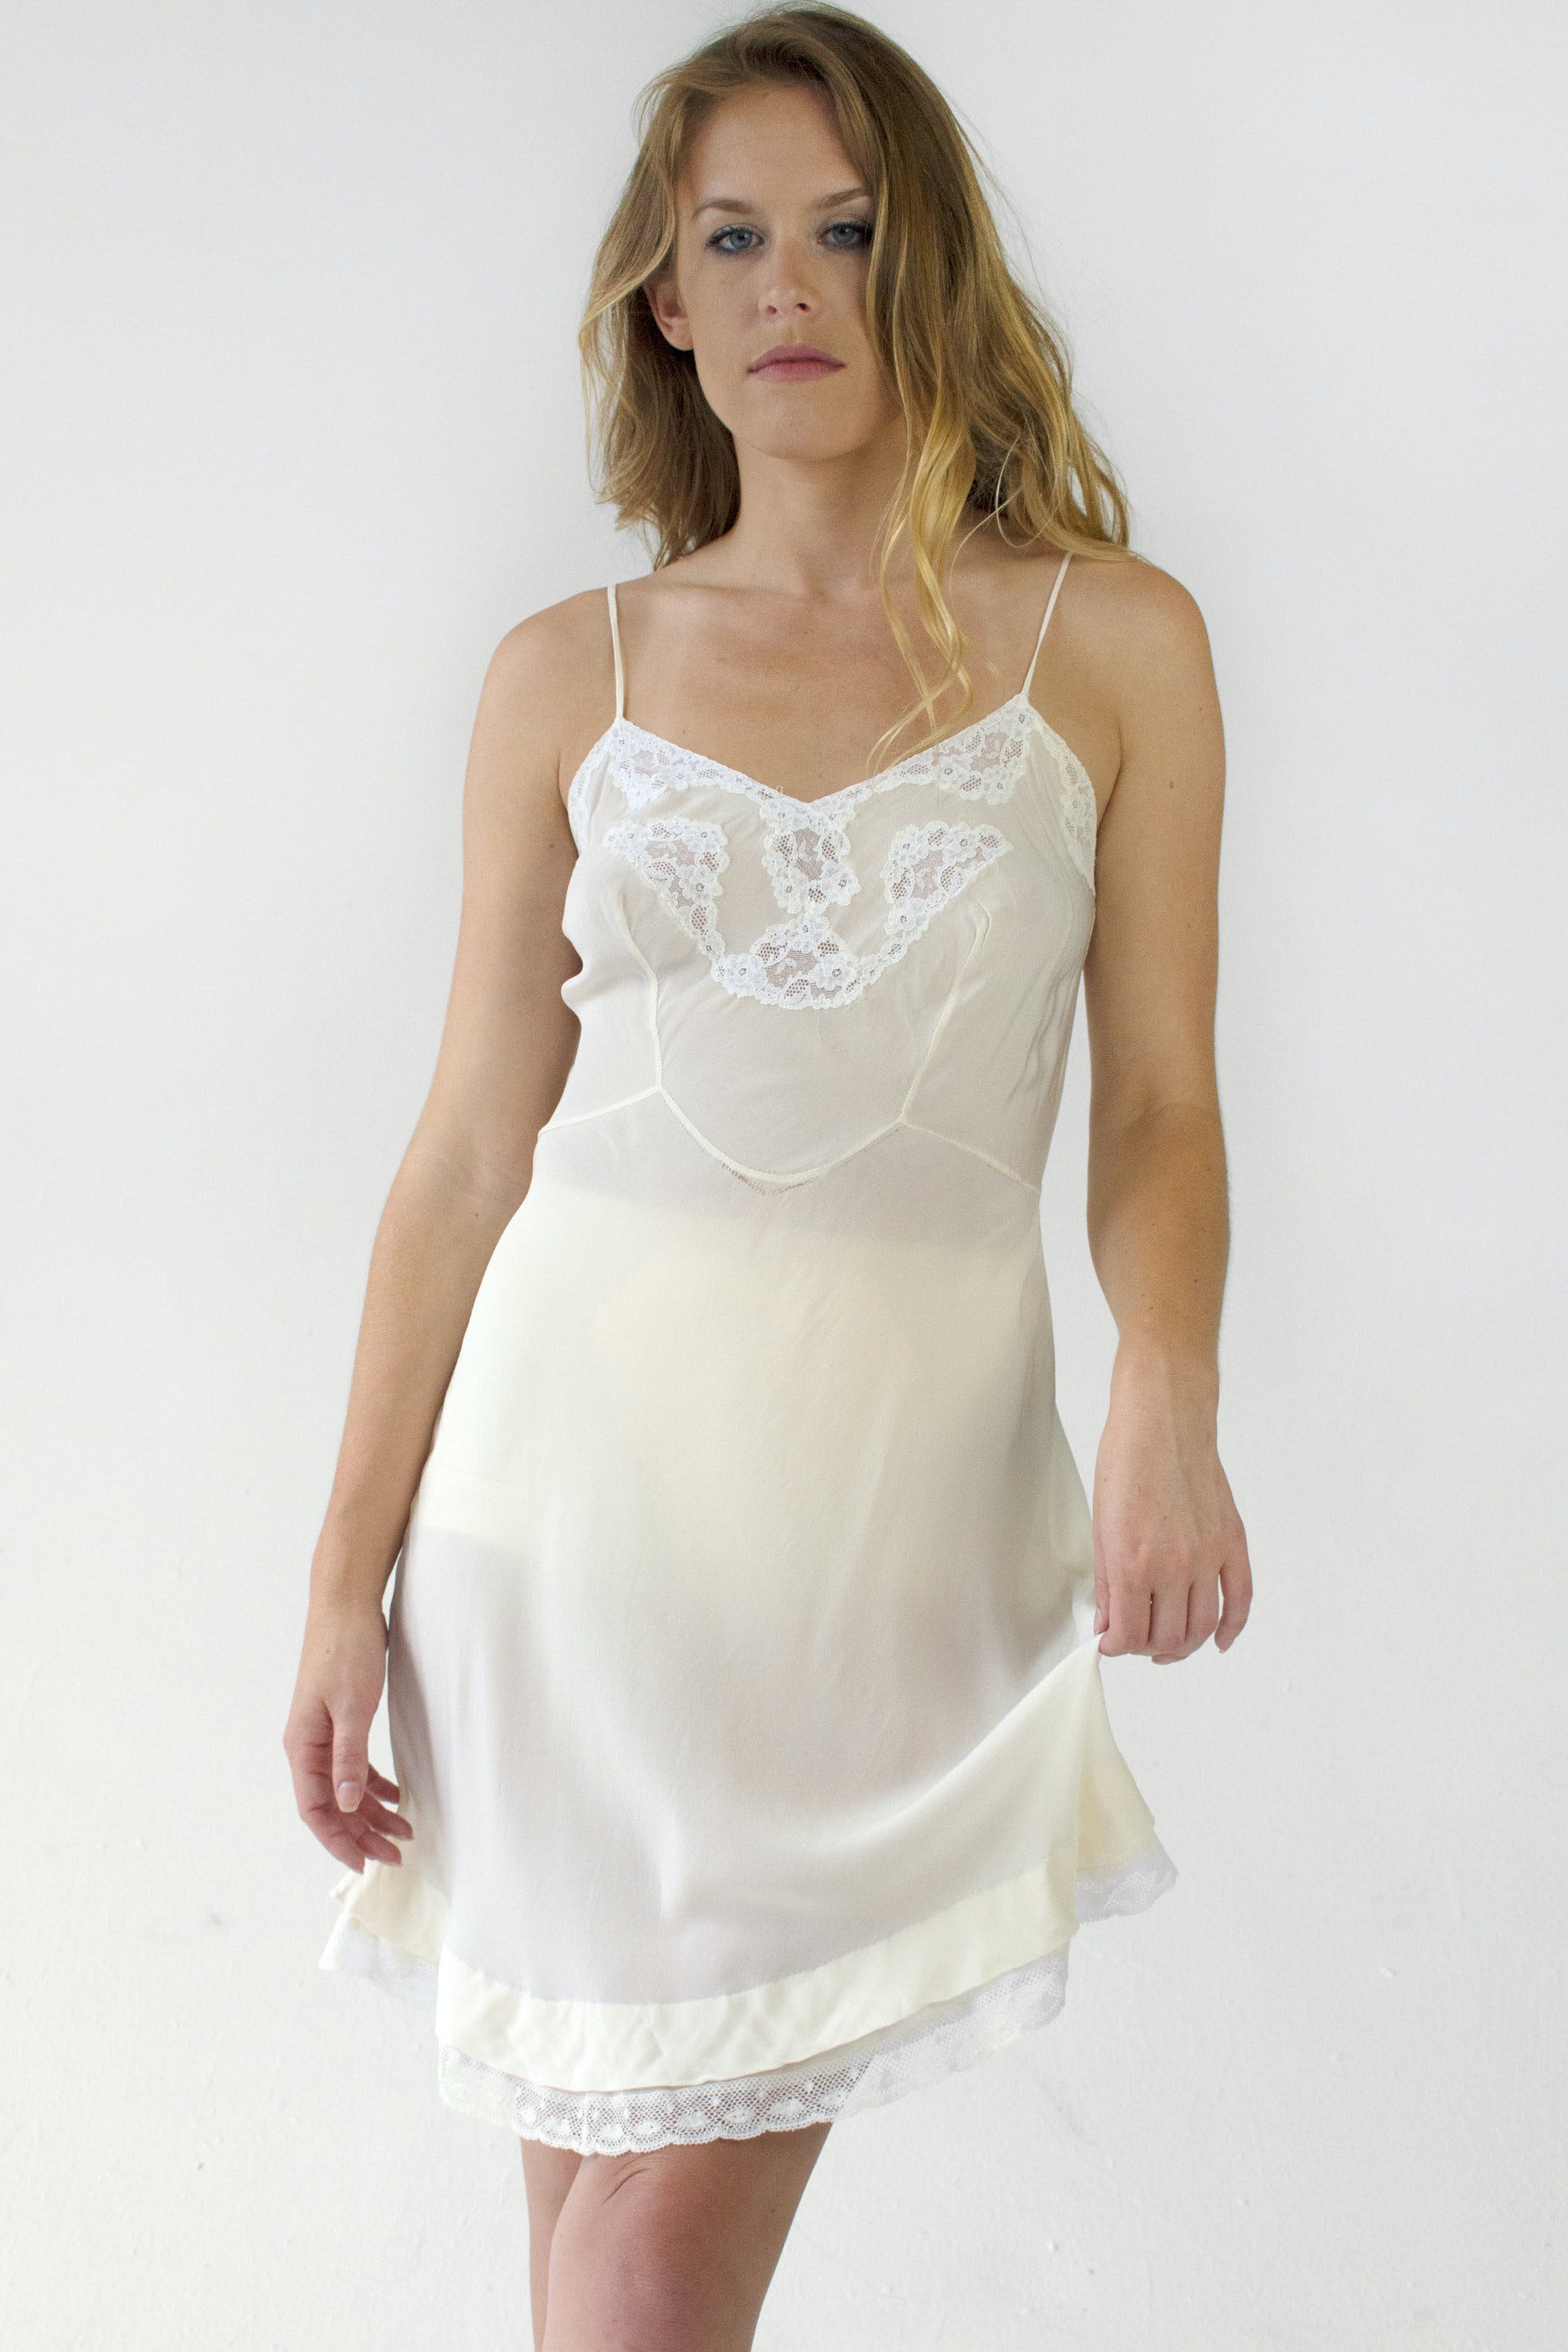 Vintage White Lace Lingerie Slip Dress | Shop THRILLING